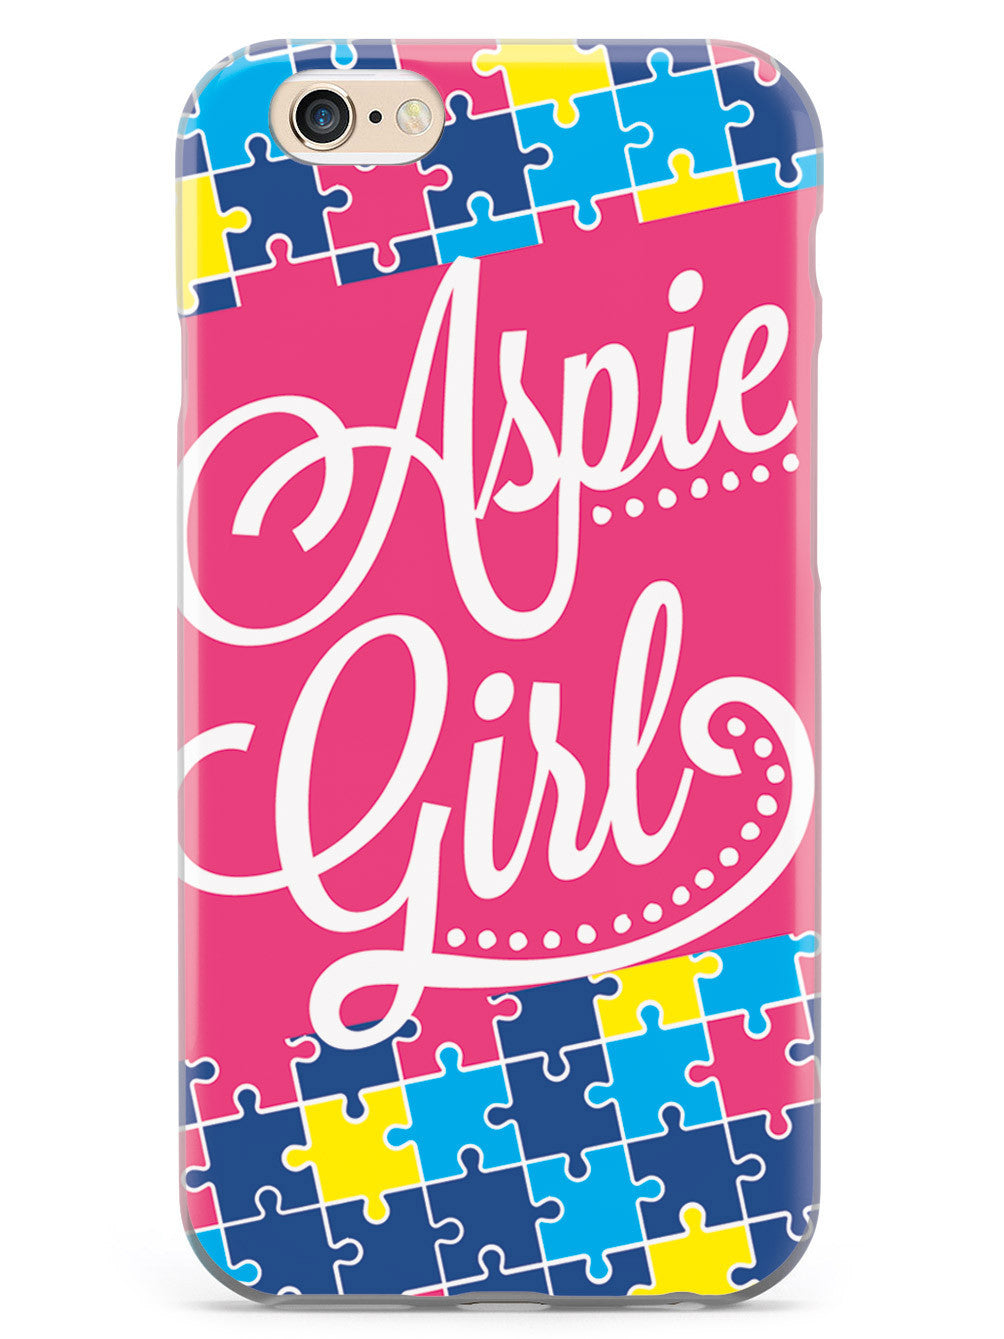 Aspie Girl - Asperger's Syndrome Case